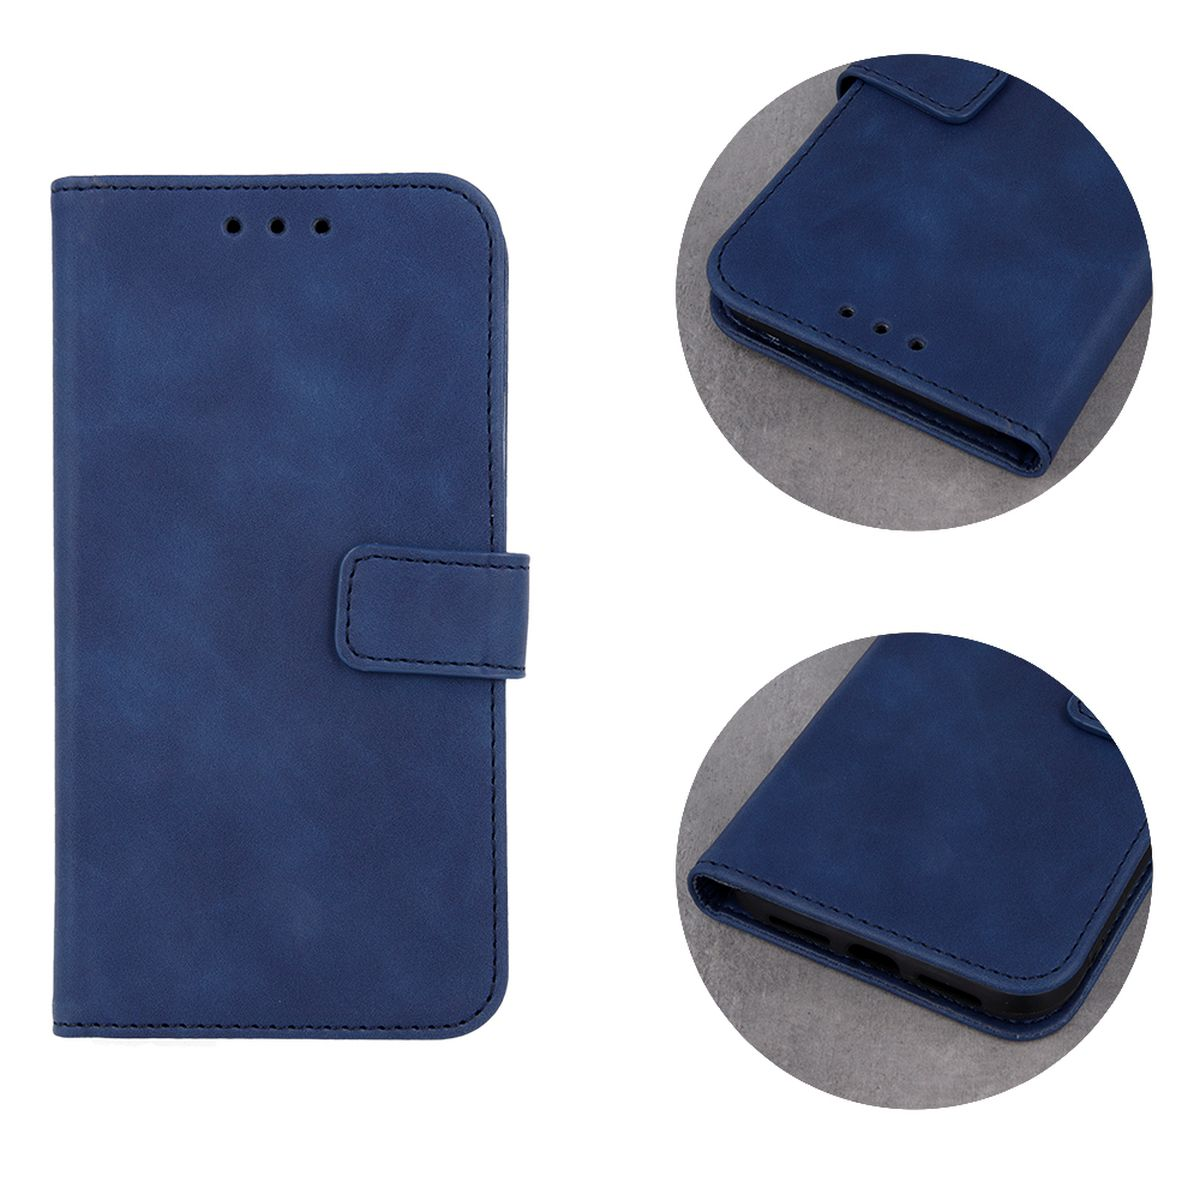 A21s, Bookcover, Blau COFI Smart Galaxy Samsung, Velvet,